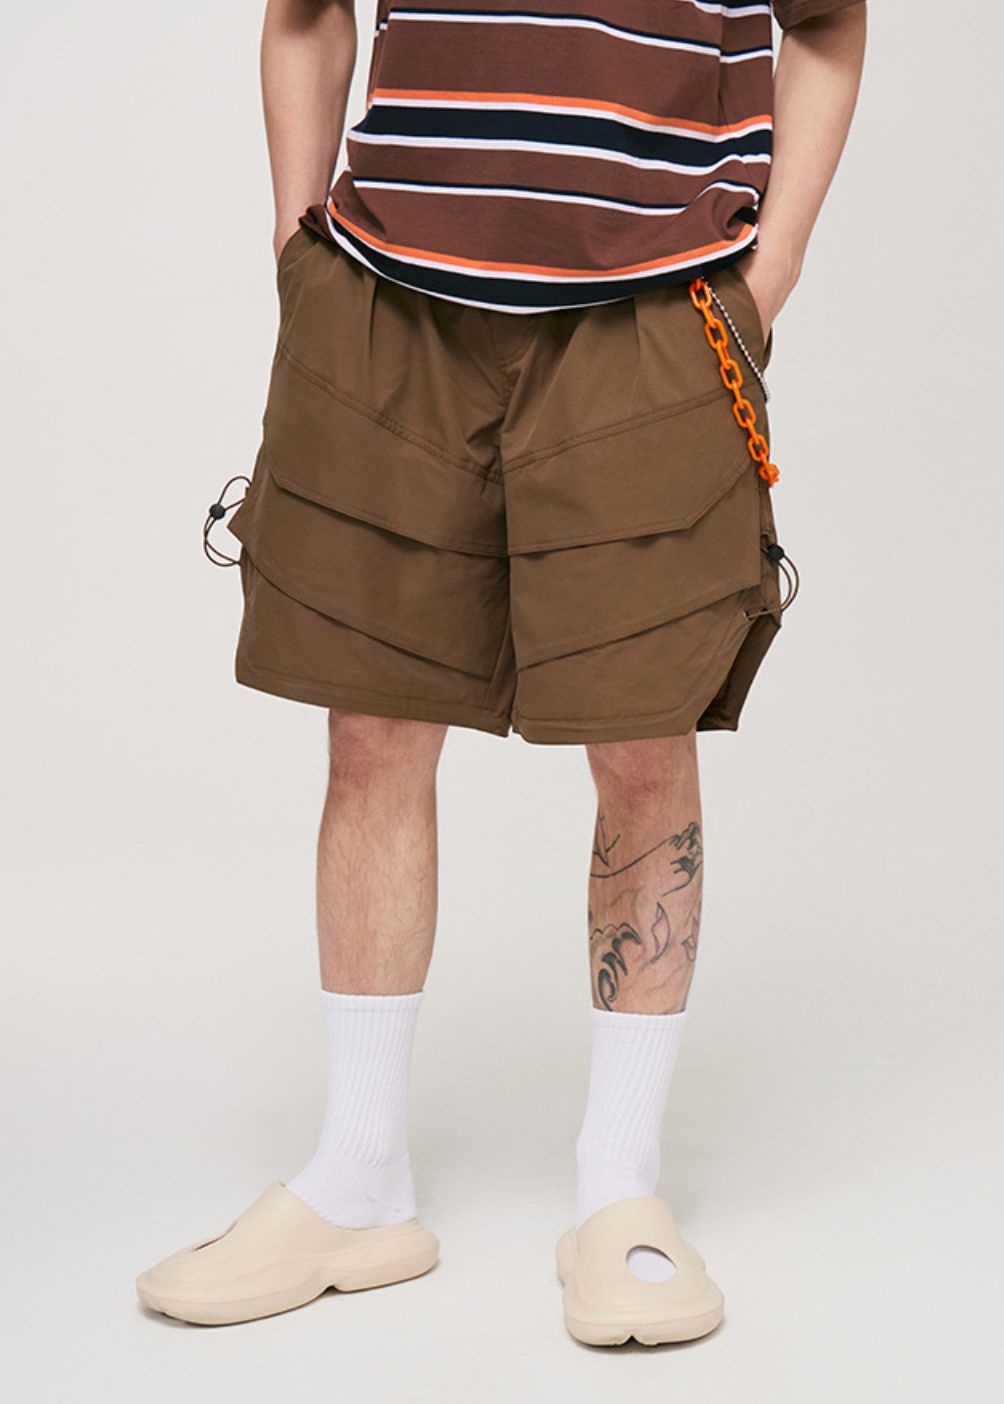 Cityboy Elastic Shorts in Brown